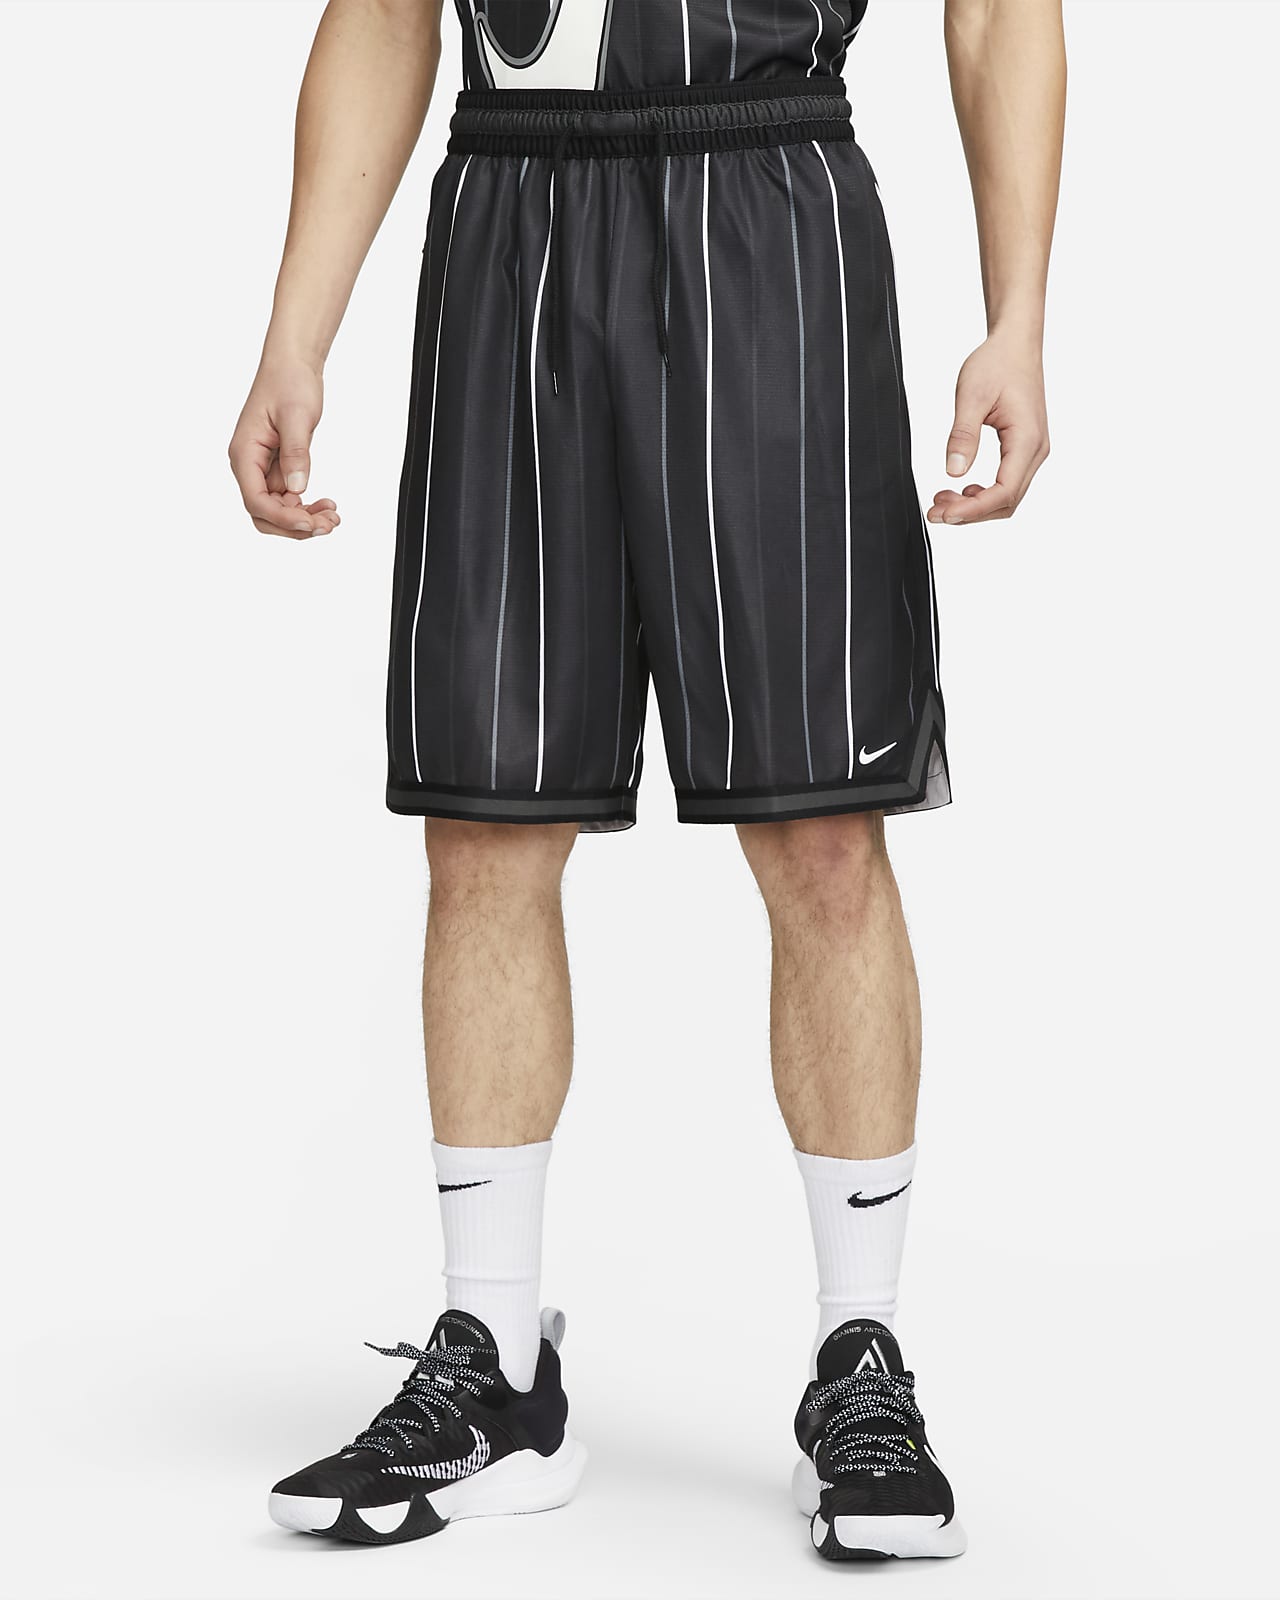 Men's Nike Dri-FIT DNA Basketball Shorts